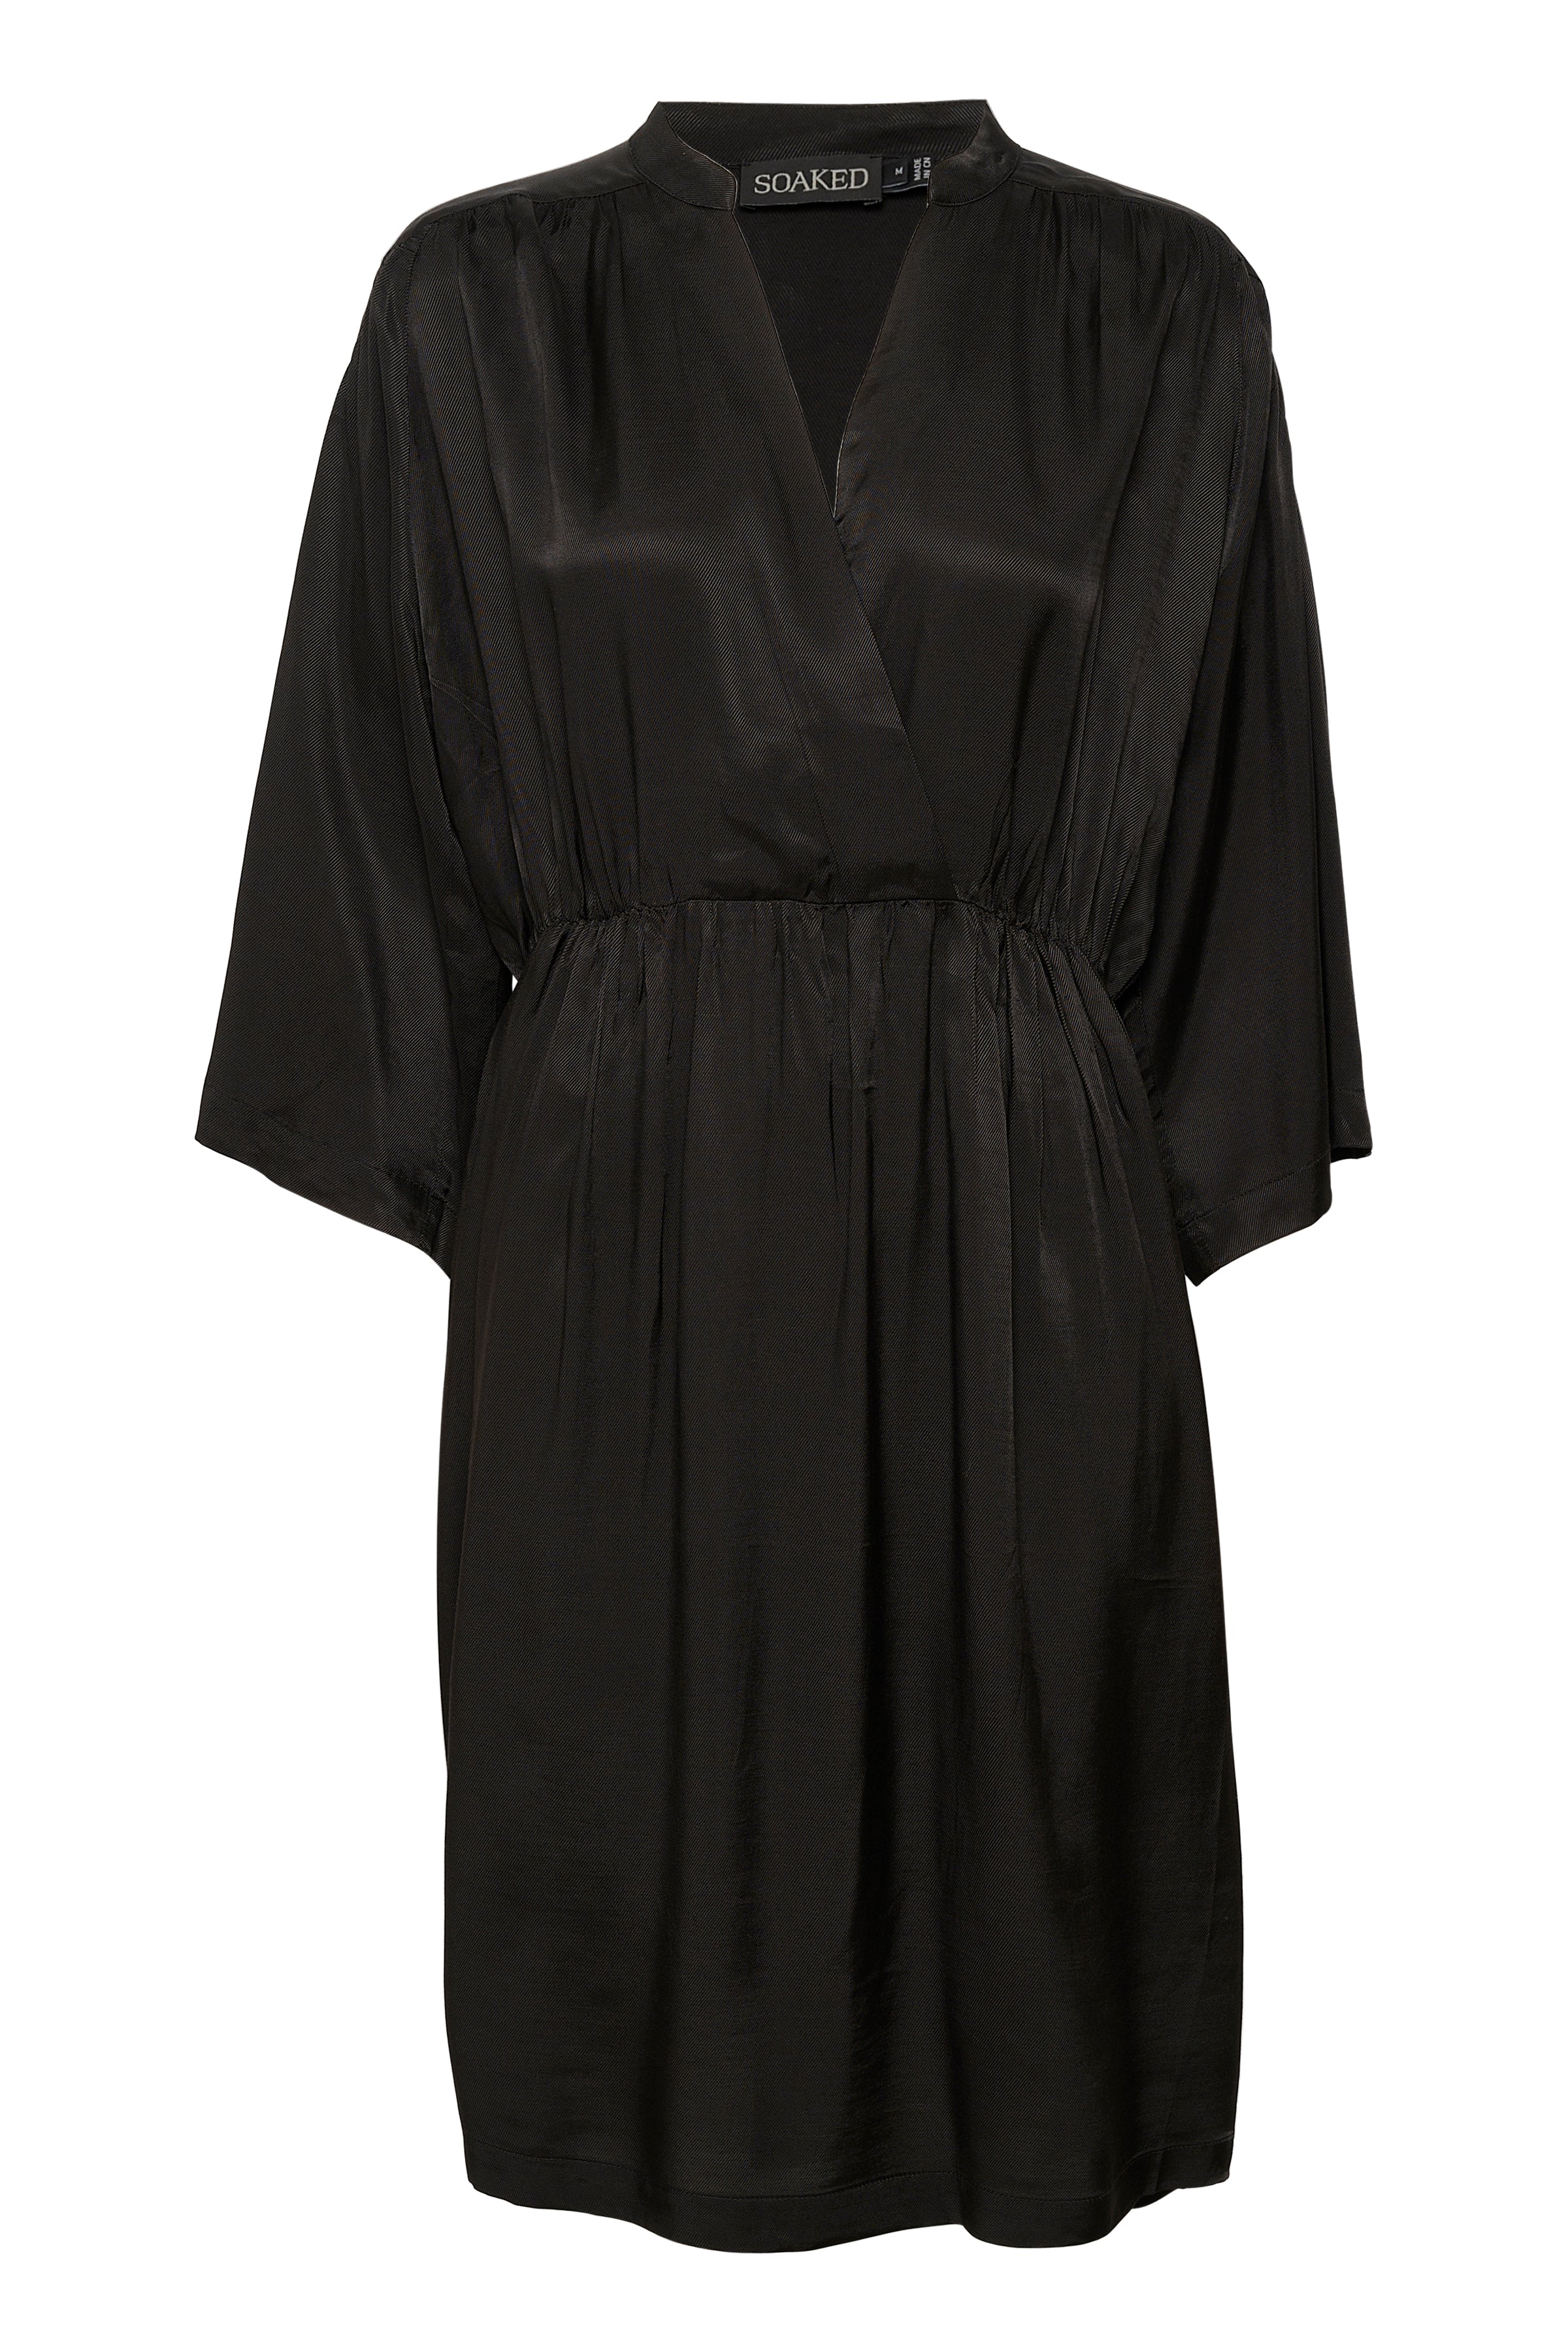 Soaked Obelia Dress, Black